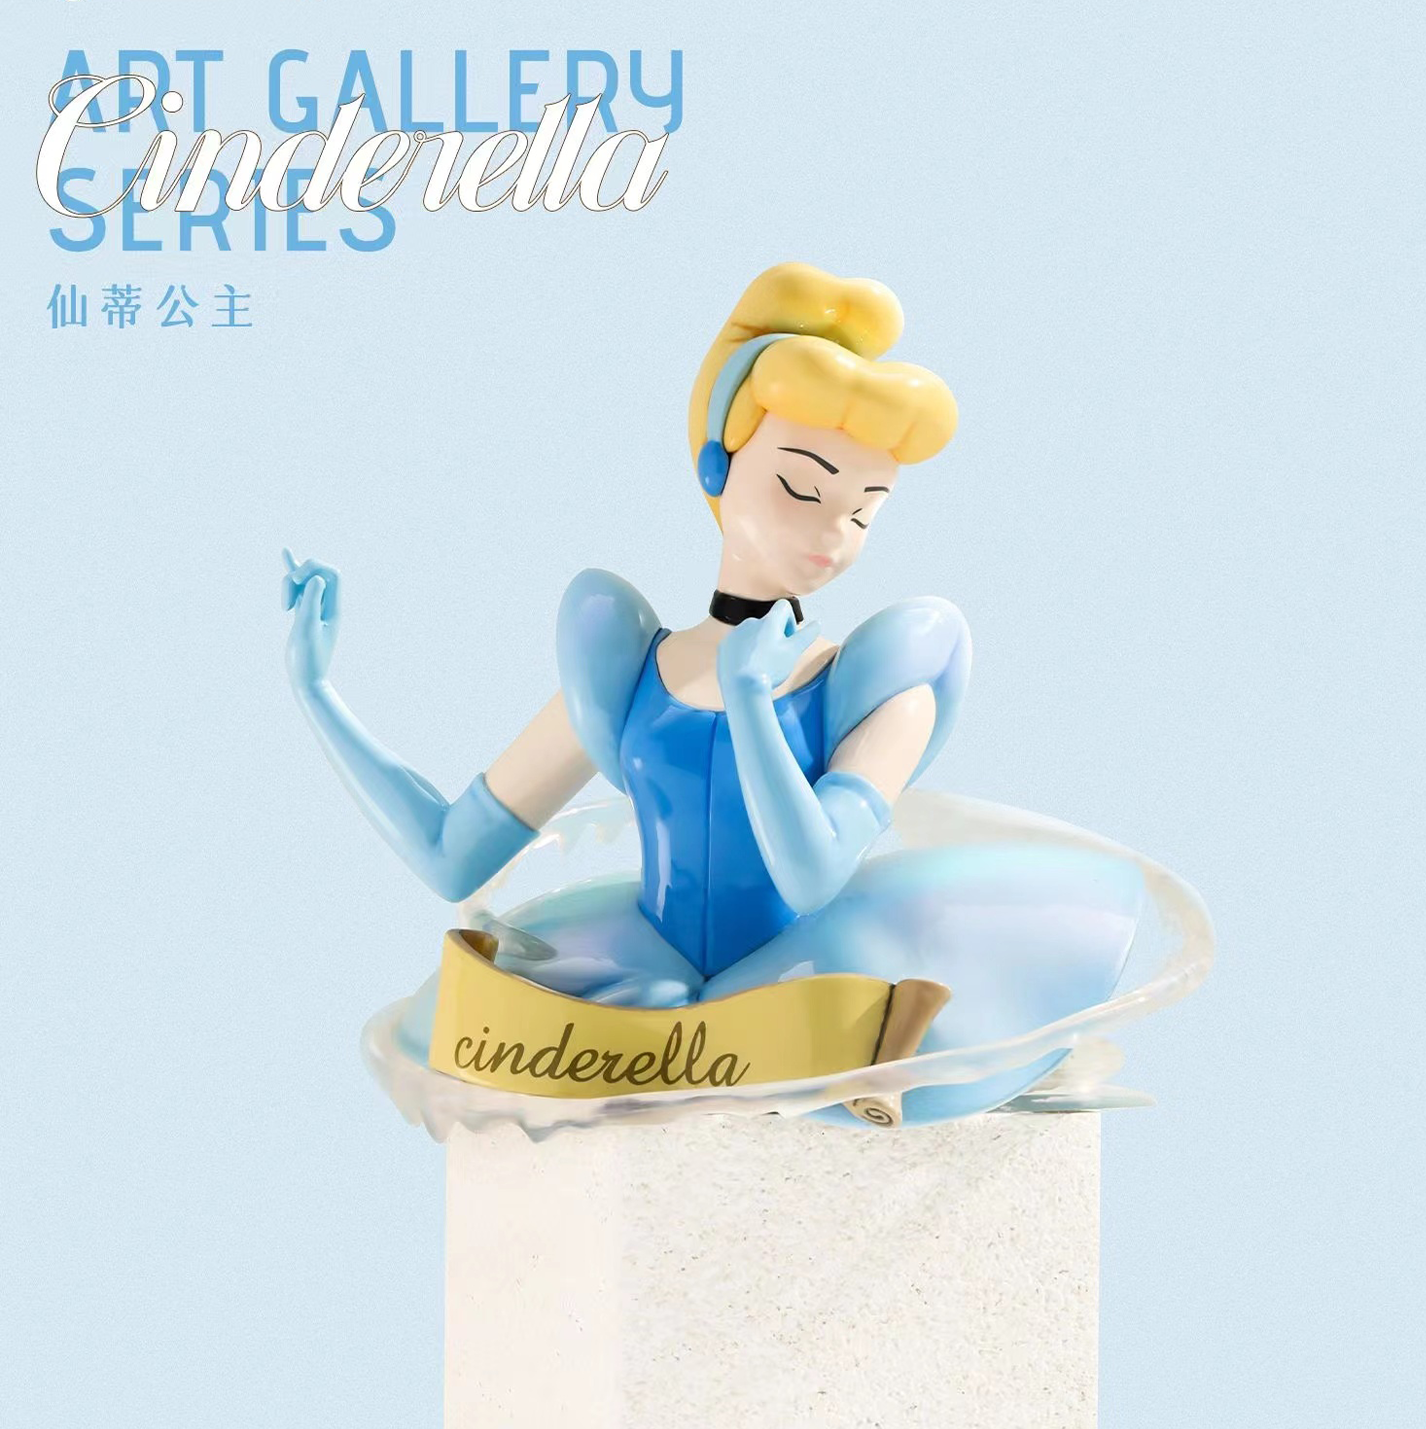 【HOT】Disney princess art gallery series toy doll